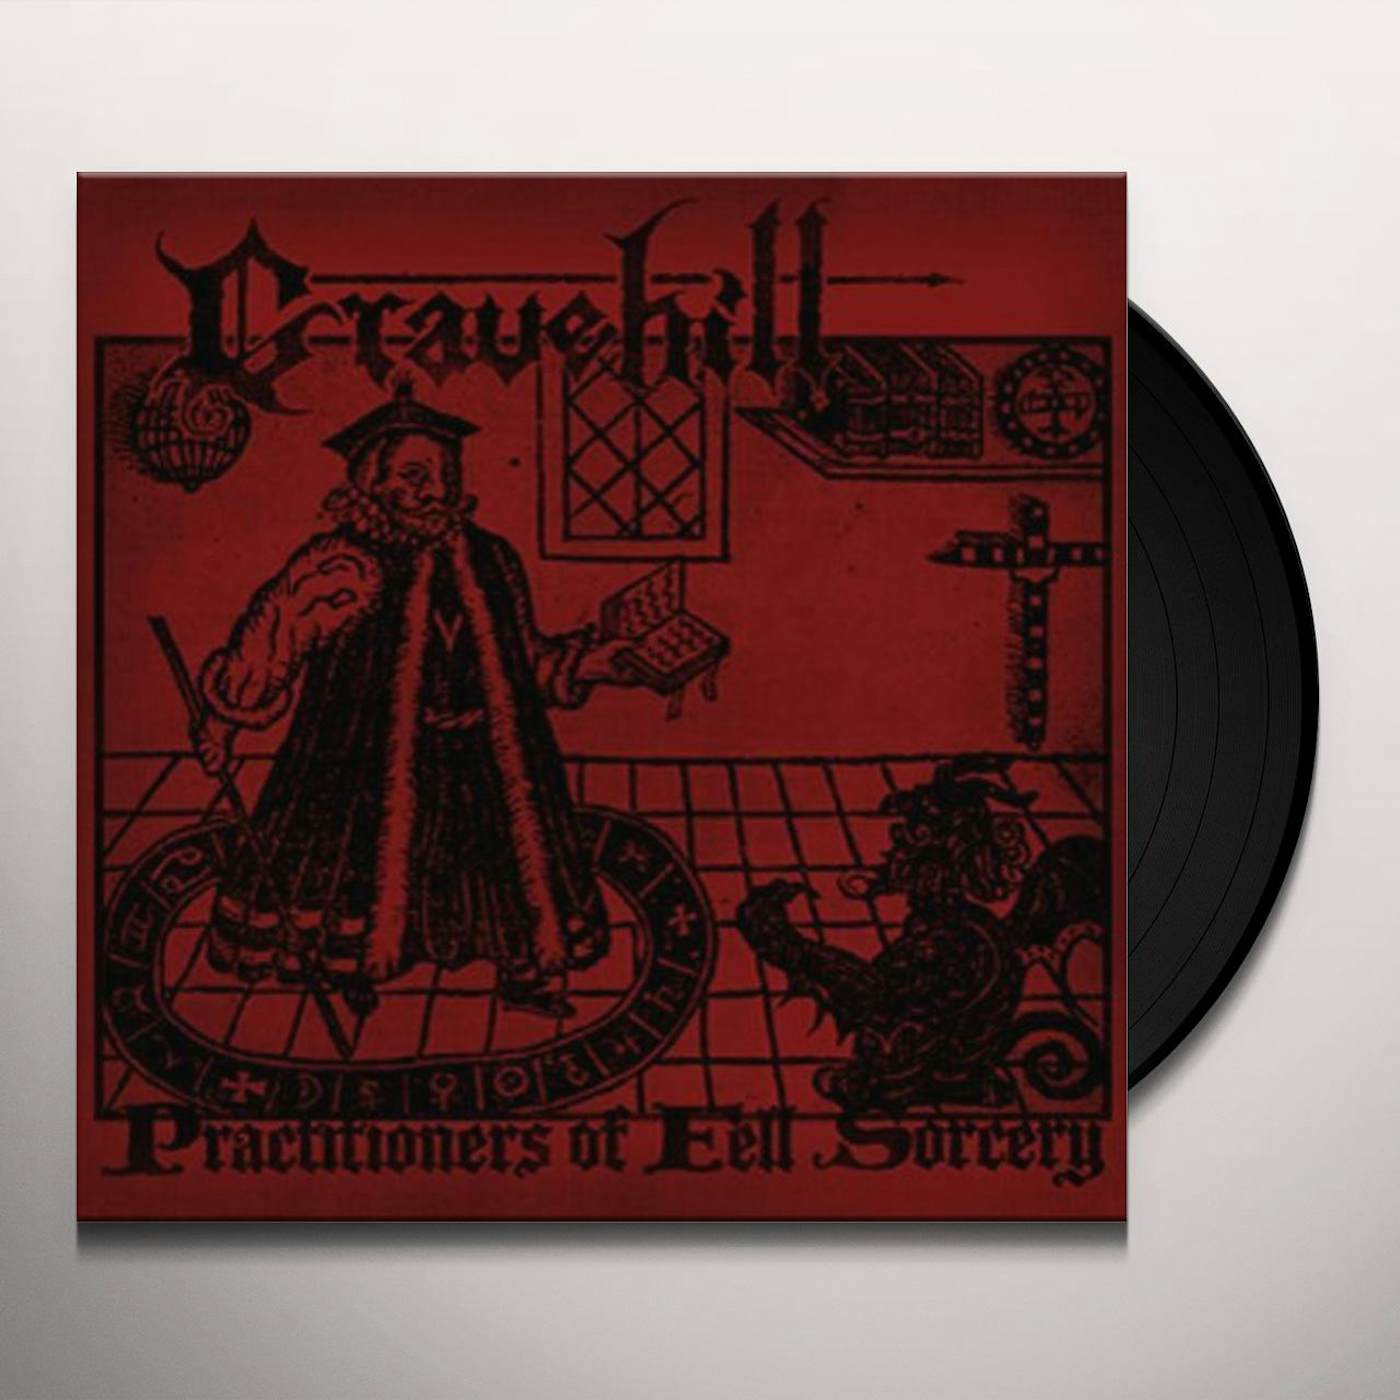 Gravehill PRACTITIONERS OF FELL SORCERY Vinyl Record